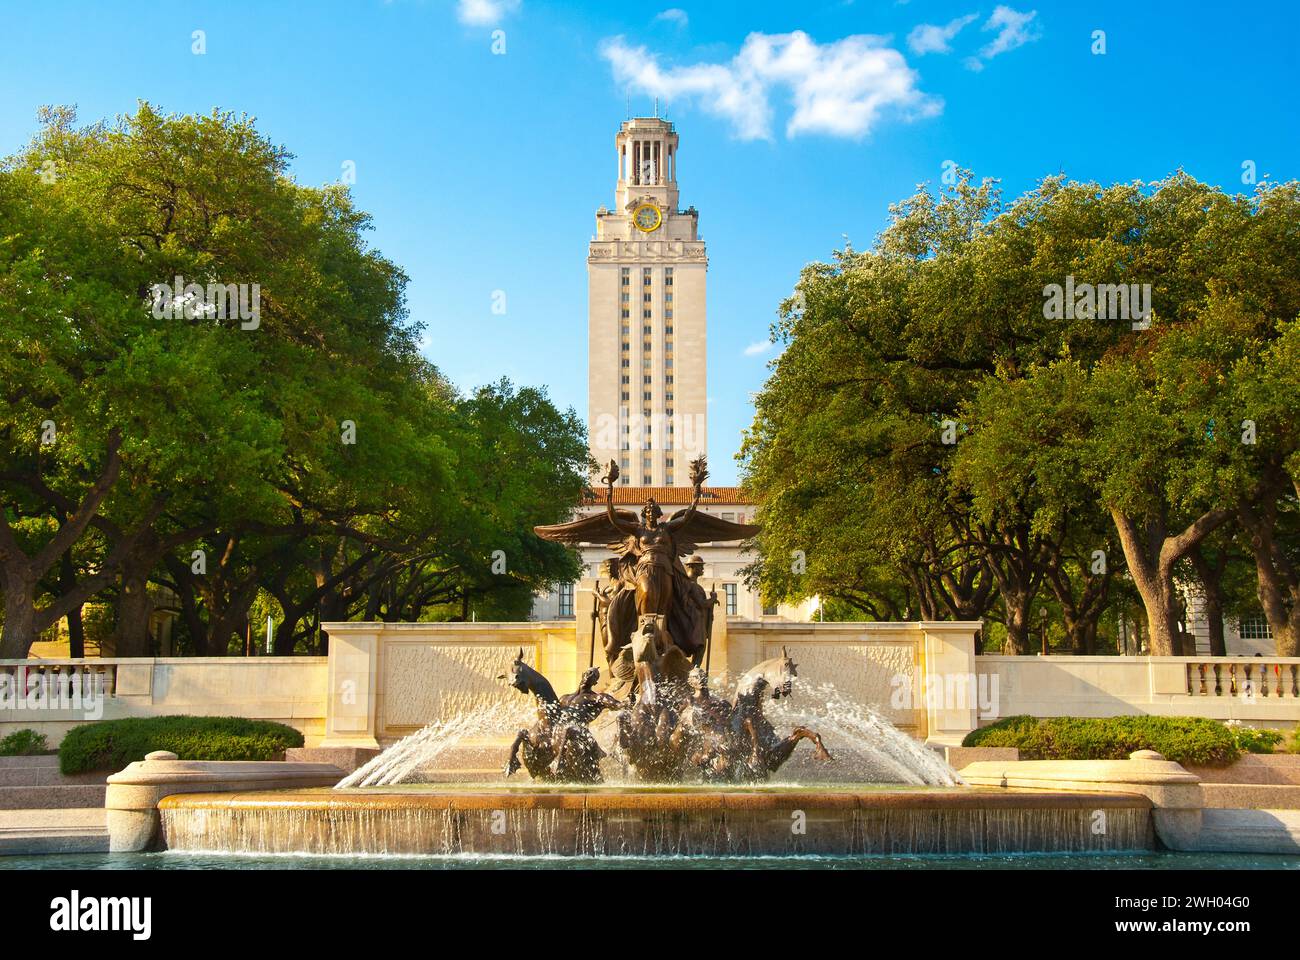 University of Texas at Austin - Littlefield Fountain (Skulptur) von Pompeo Coppini in 1933 und 307 m hoher UT Tower in Austin, Texas Stockfoto